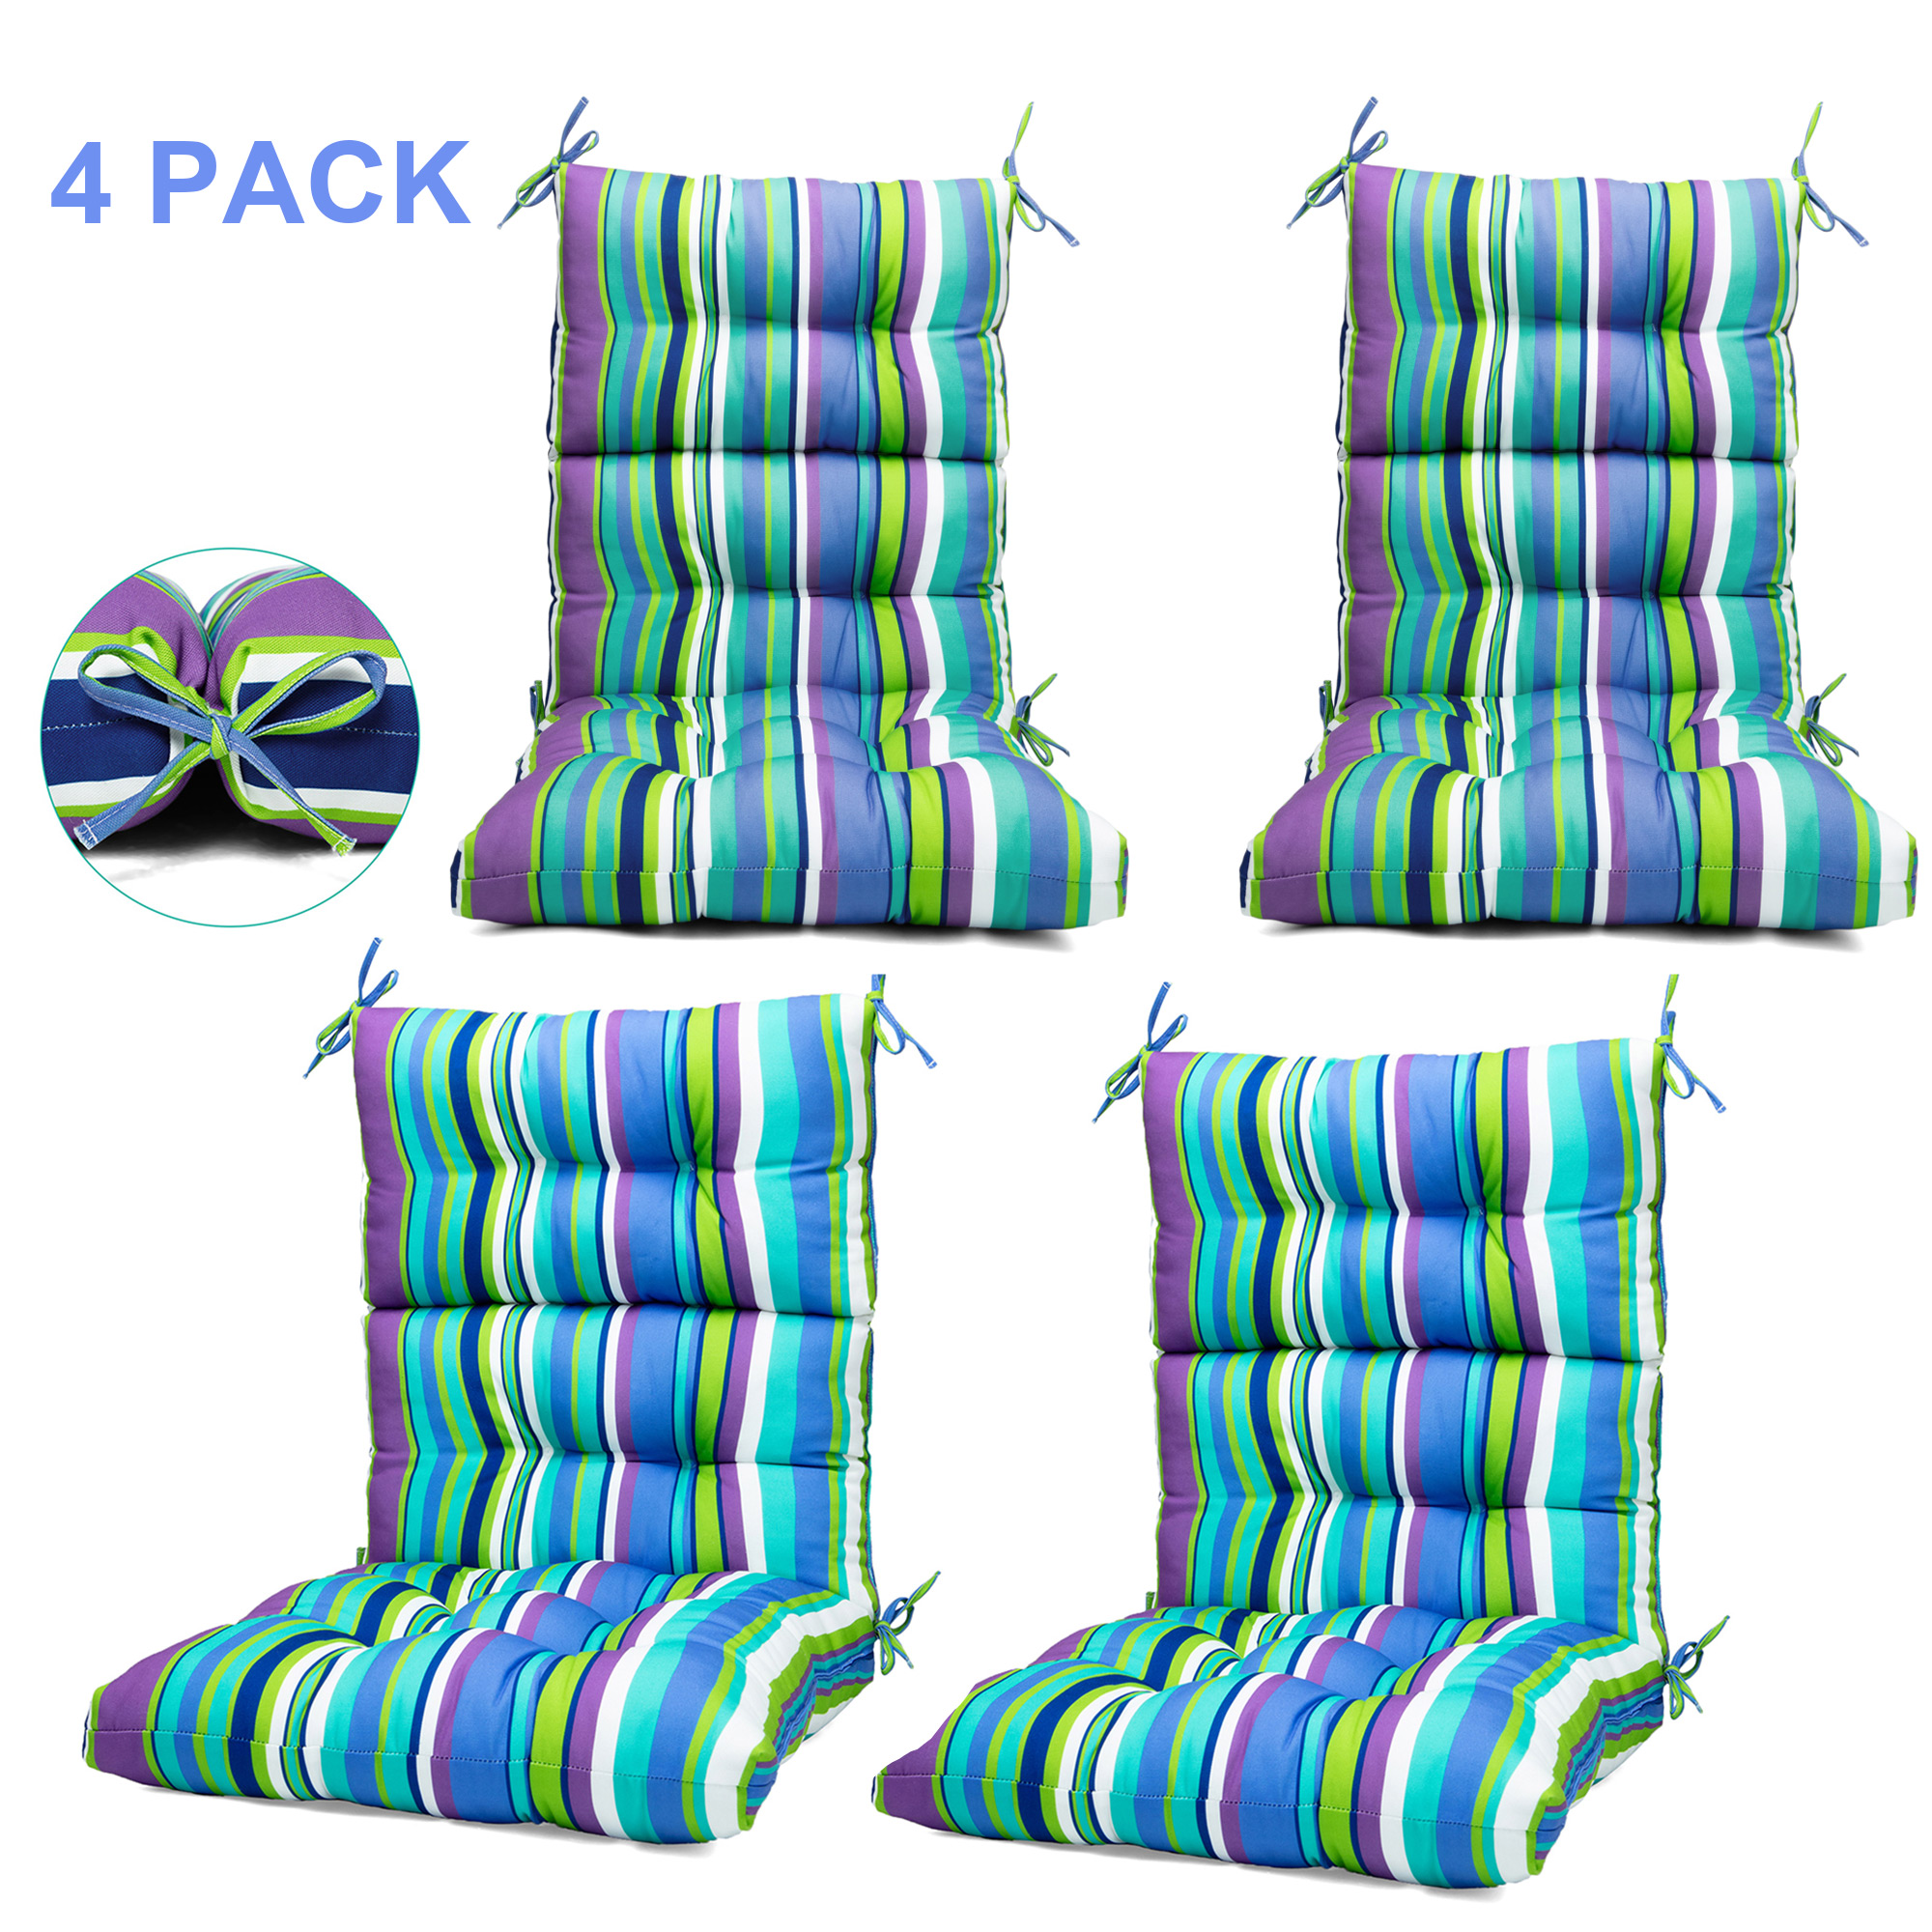 44x21 inch Outdoor Chair Cushion, 2/4pcs High Back Chair Cushions Patio Garden High Rebound Foam Chair Cushion  Waterproof Polyester Seat Cushions or Home Patio Garden Decor - image 1 of 8